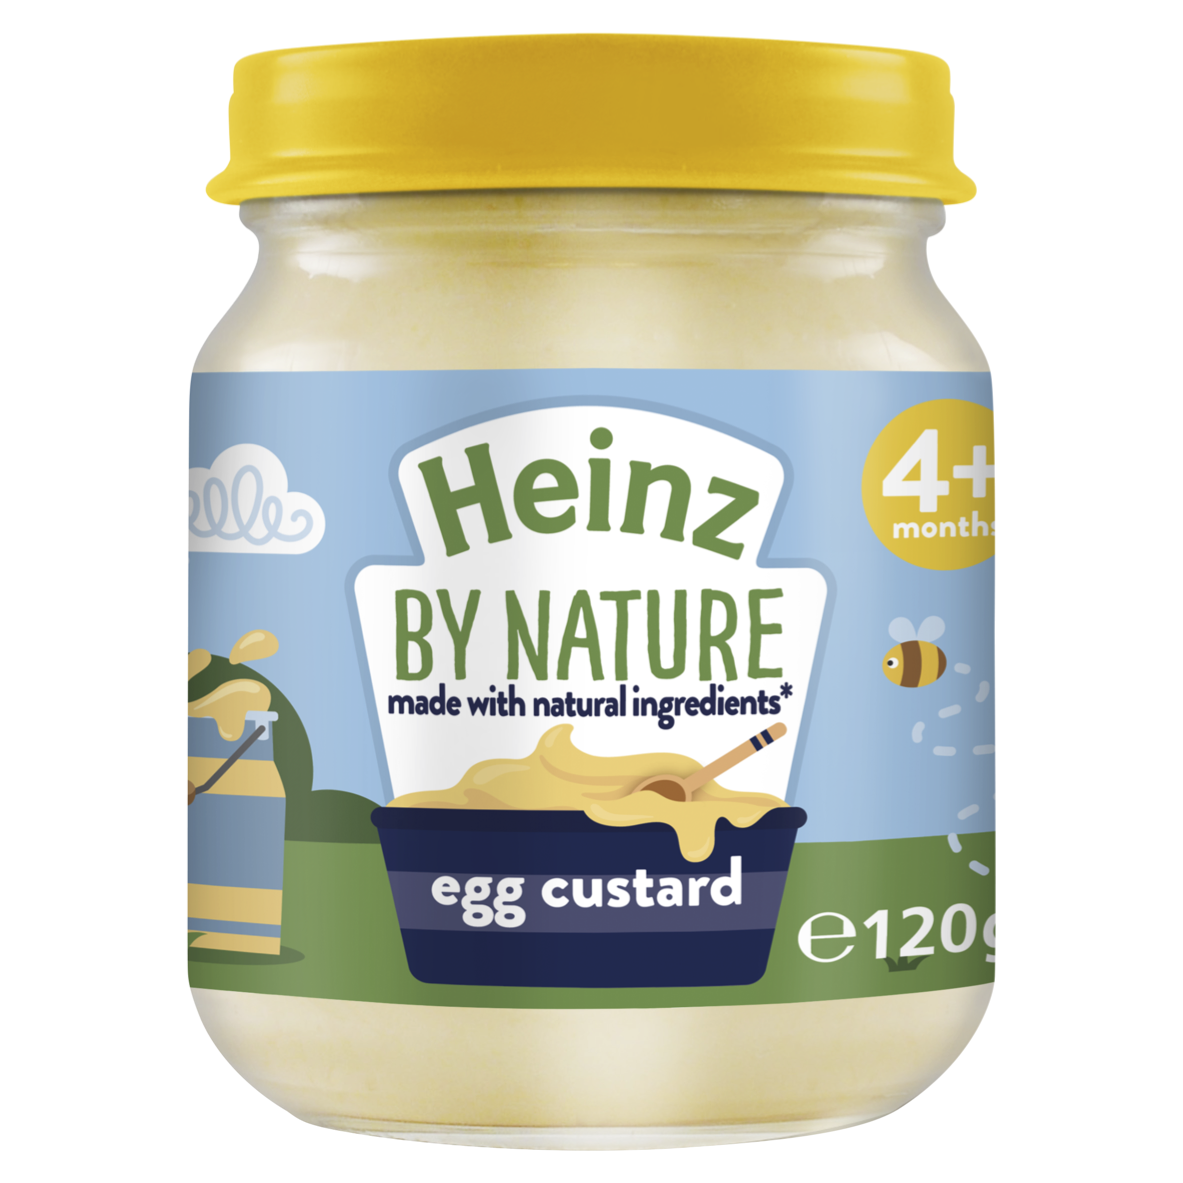 Photograph of 1x 6-pack Heinz Egg Custard 120g product